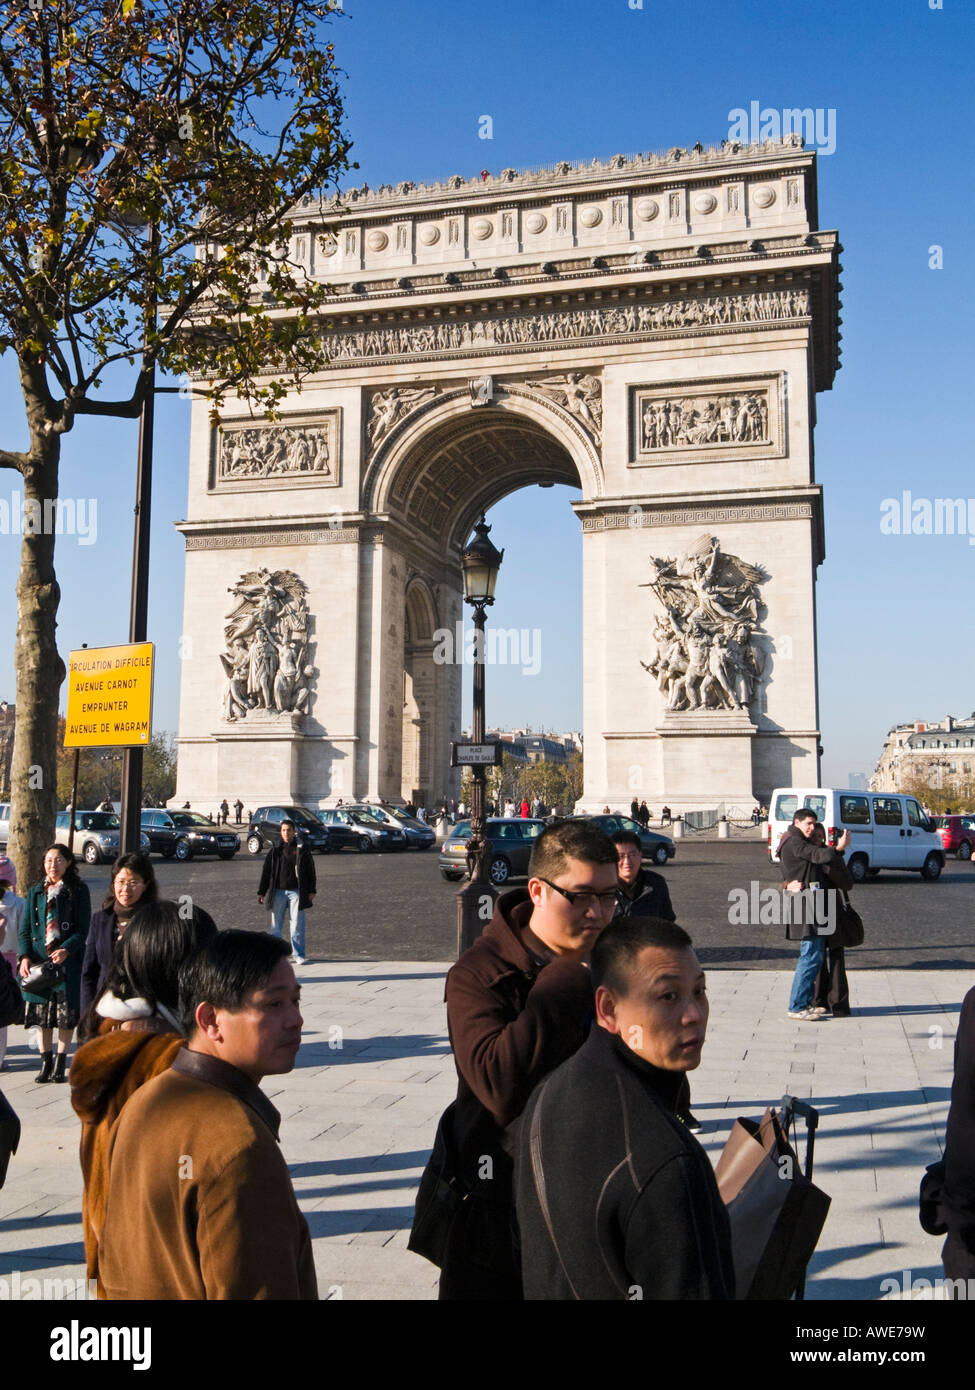 Arc de Triomphe, Paris with tourists visiting the landmark. Stock Photo